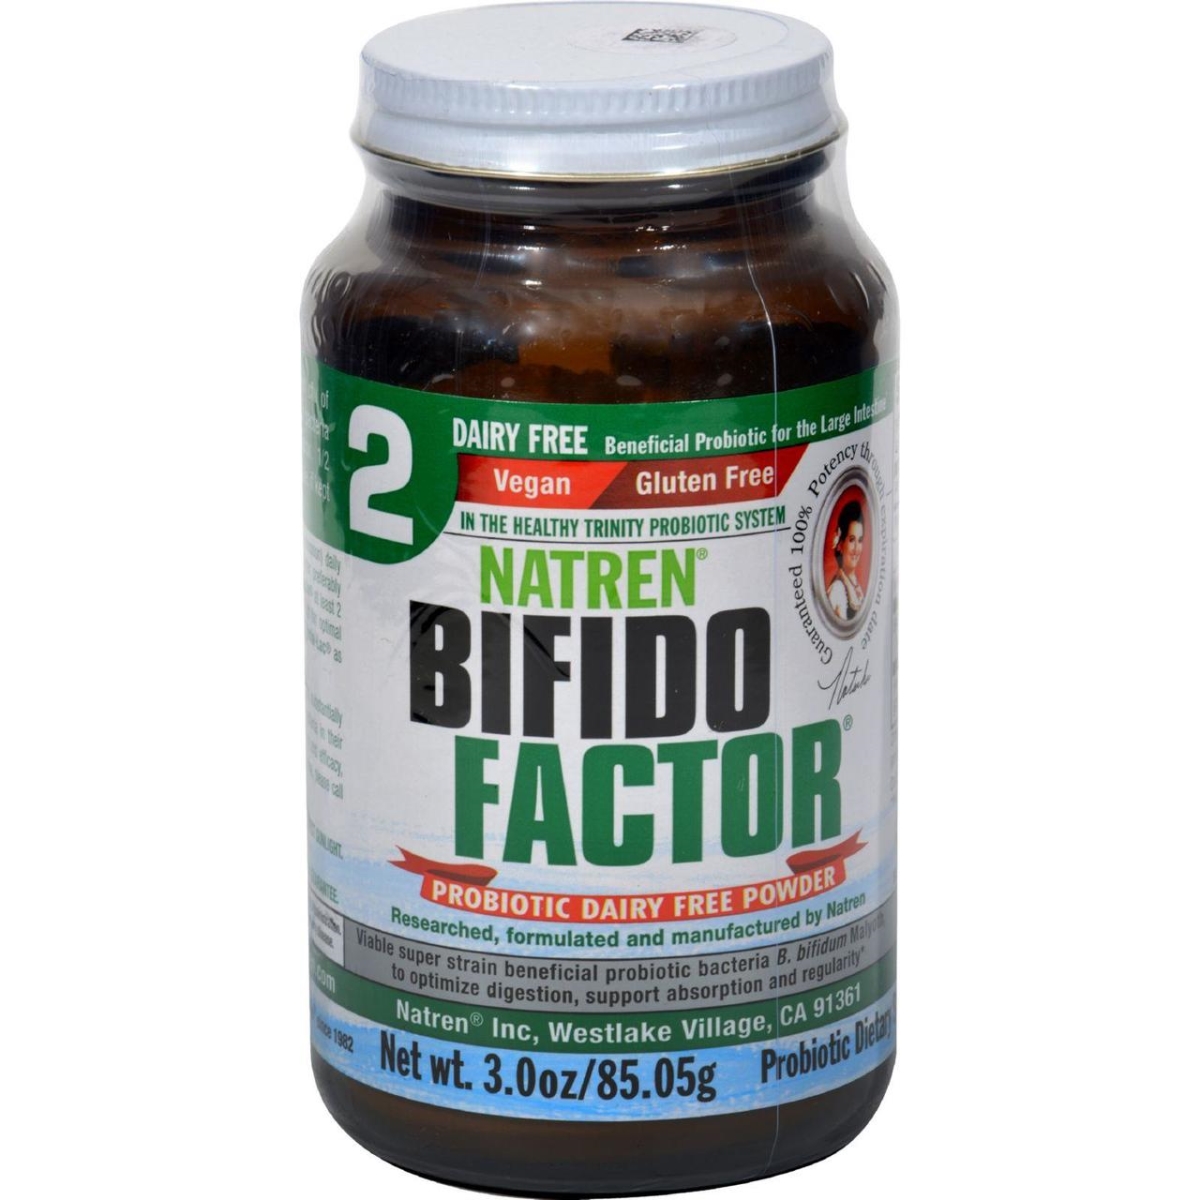 Hg0810960 3 Oz Bifido Factor Dairy Free